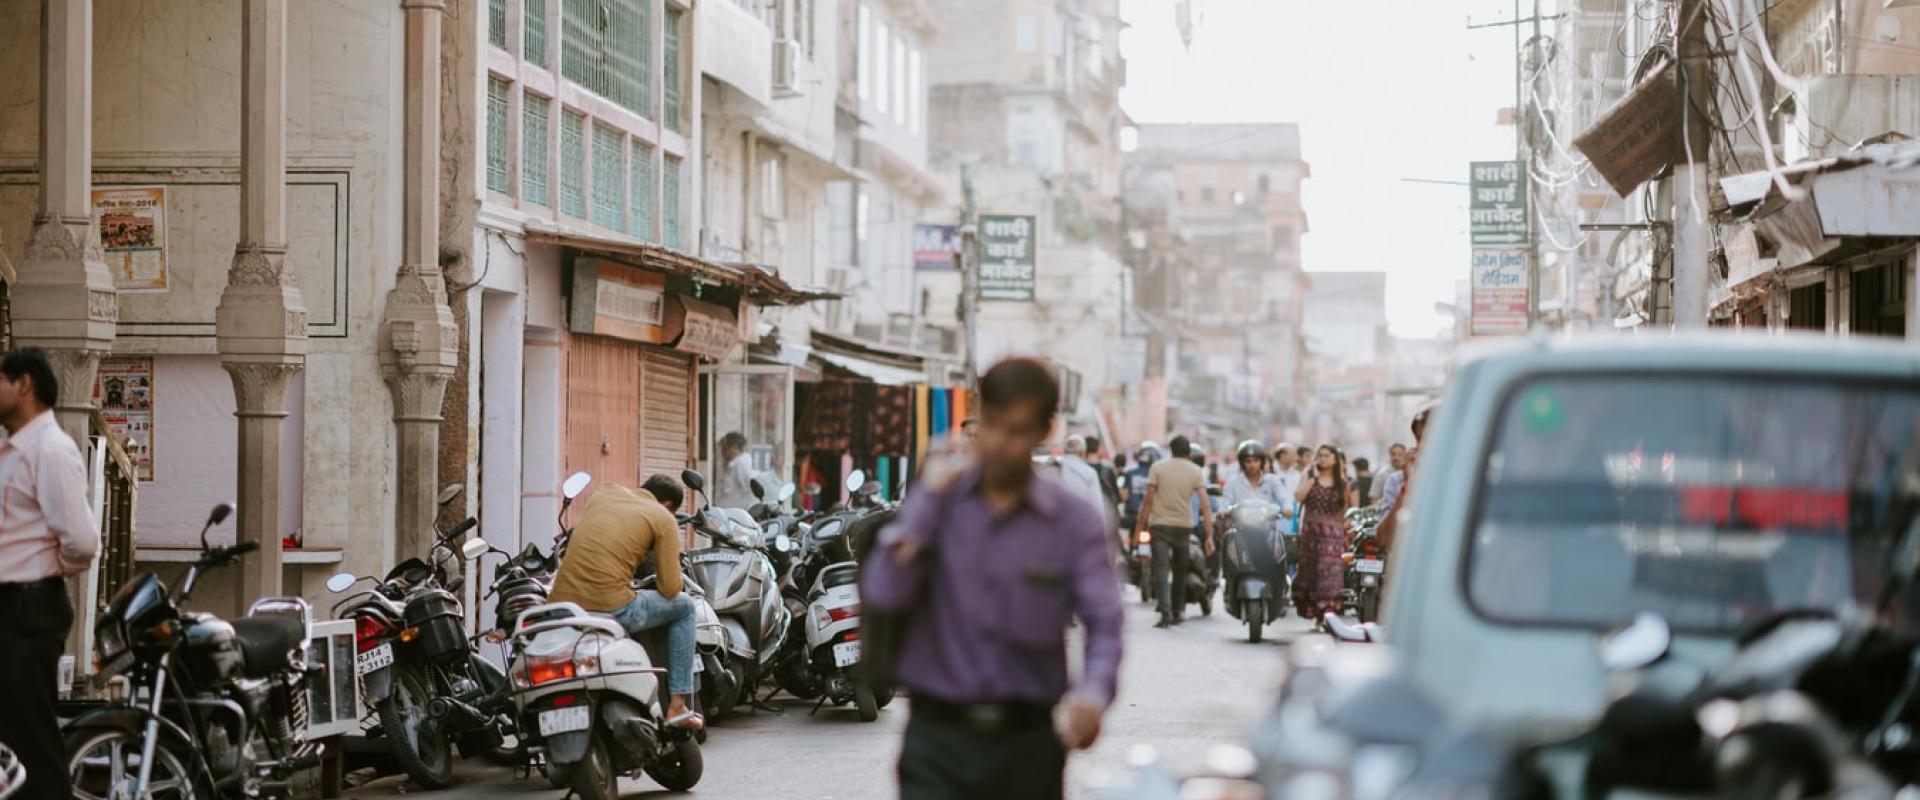 الهند photo by Annie Spratt on Unsplash 